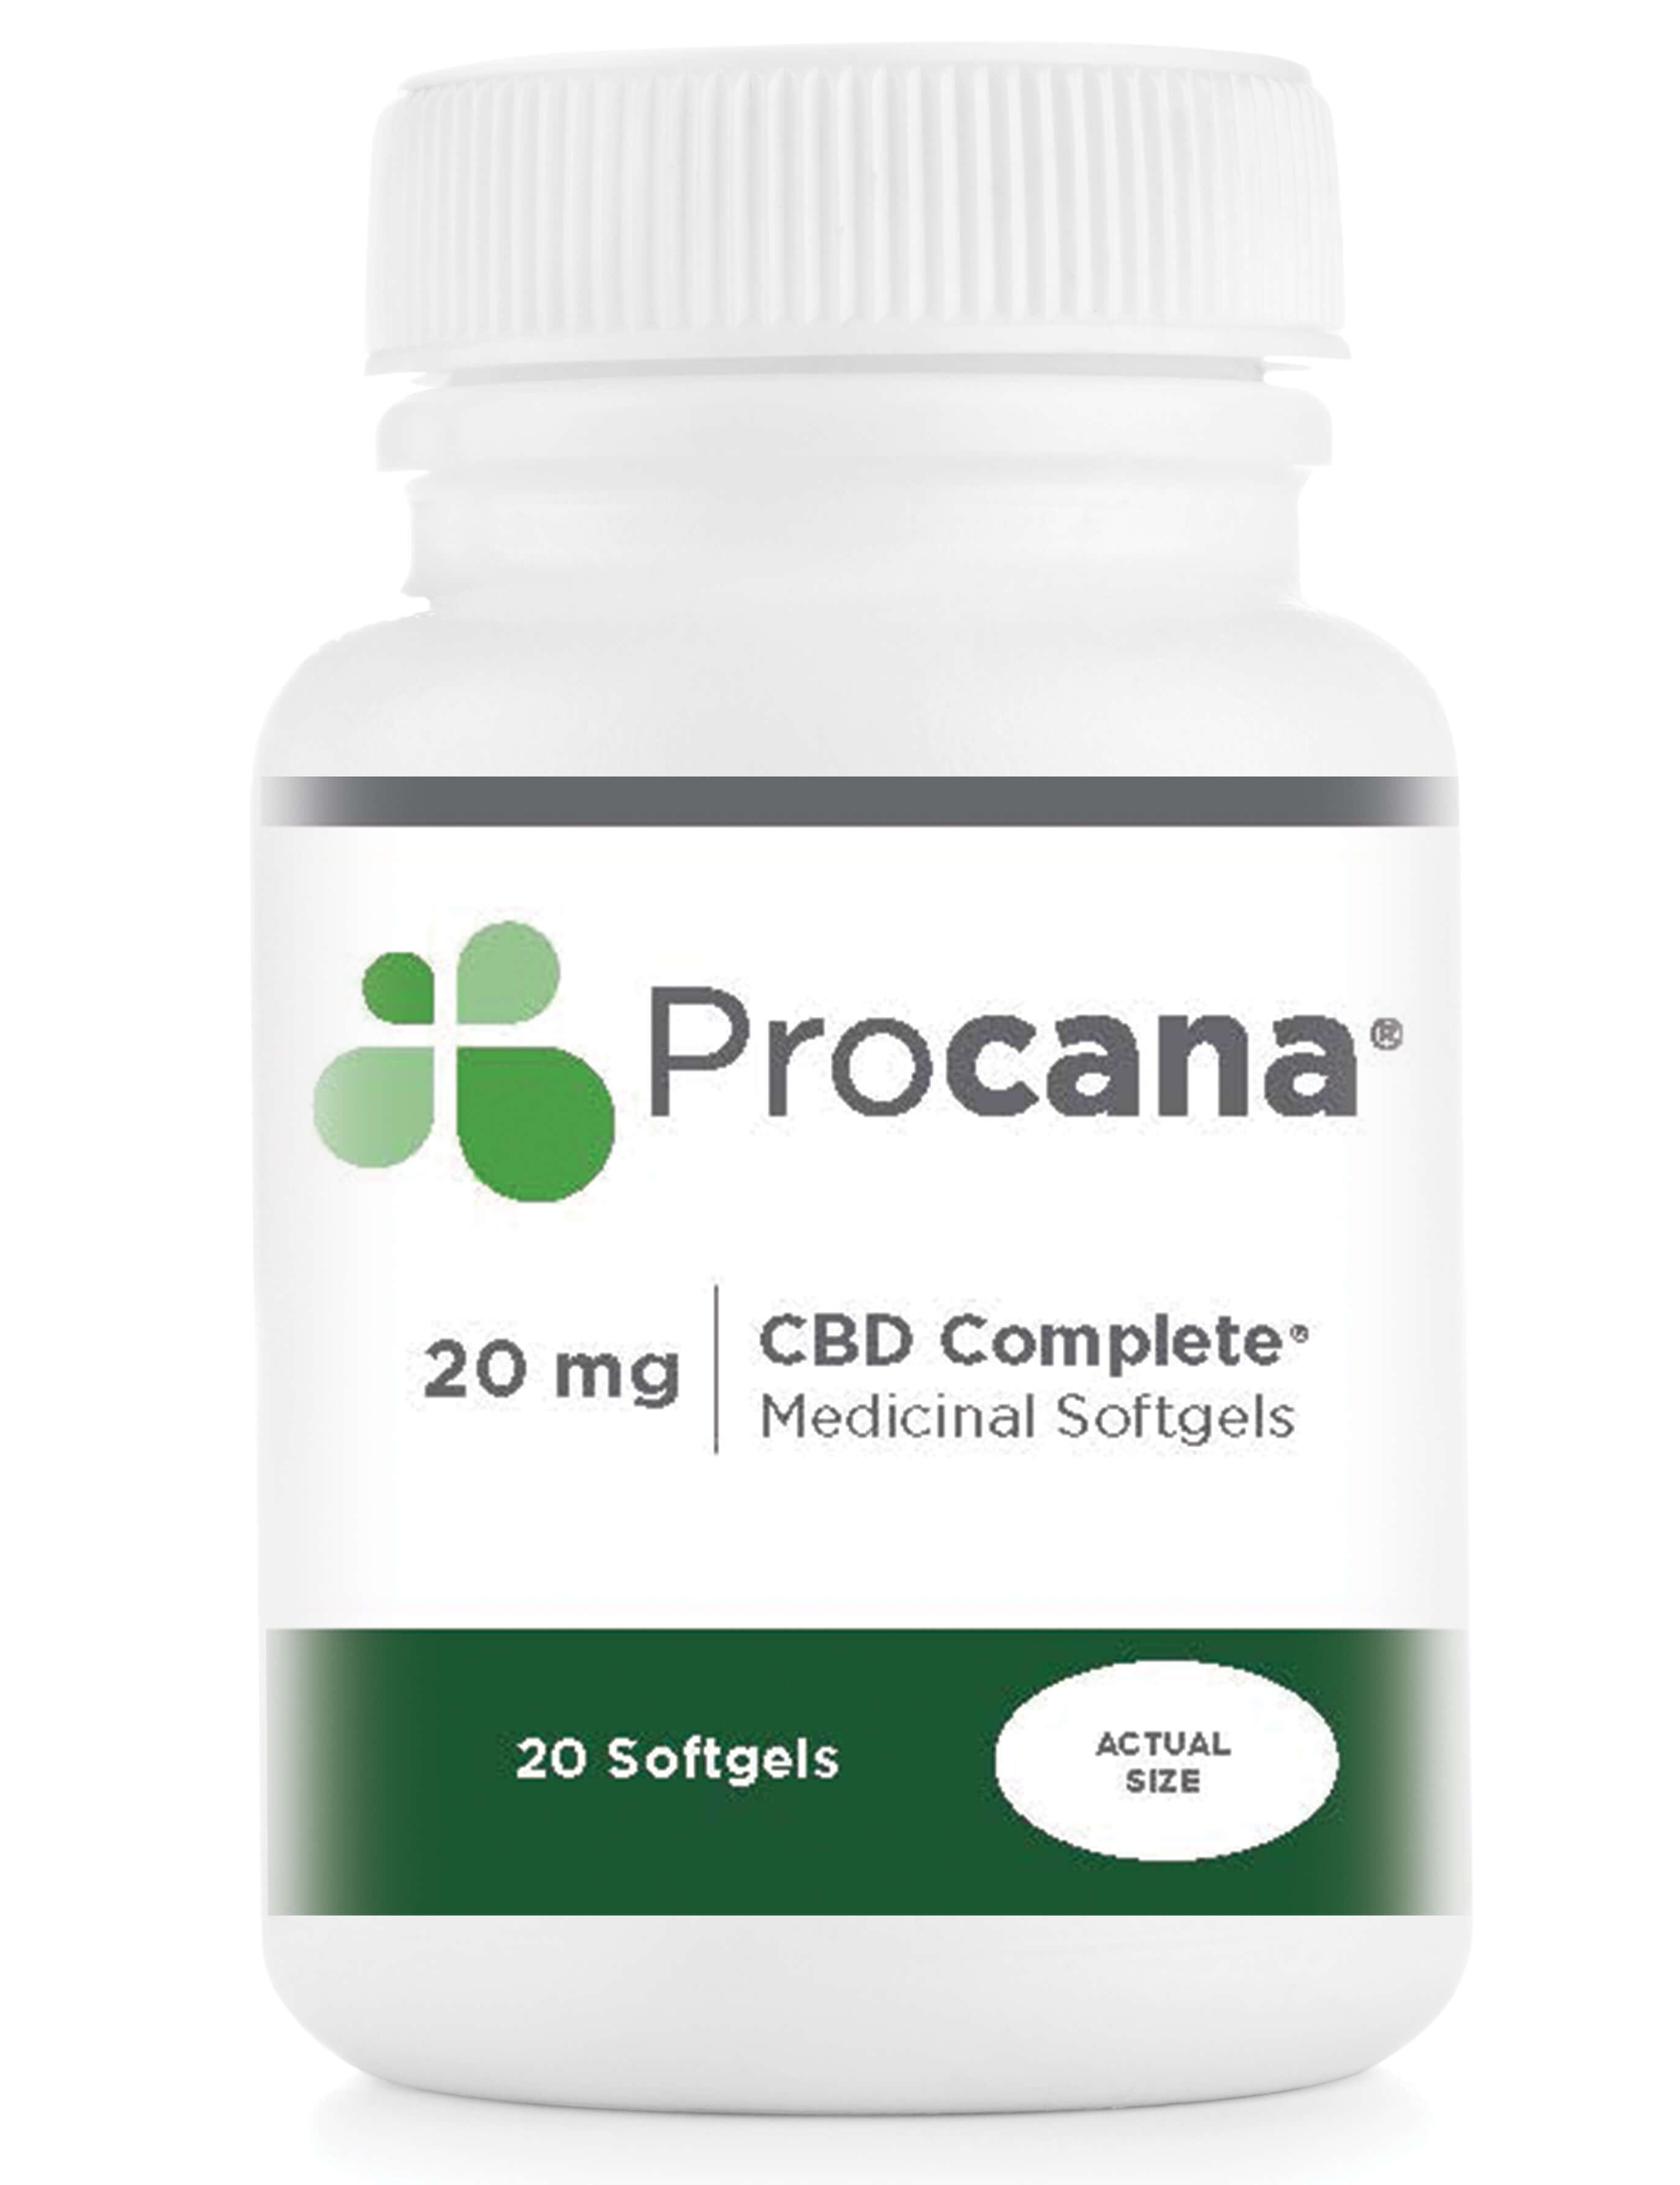 marijuana-dispensaries-mendocino-organics-in-vallejo-procana-softgels-cbd-complete-20mg-20ct